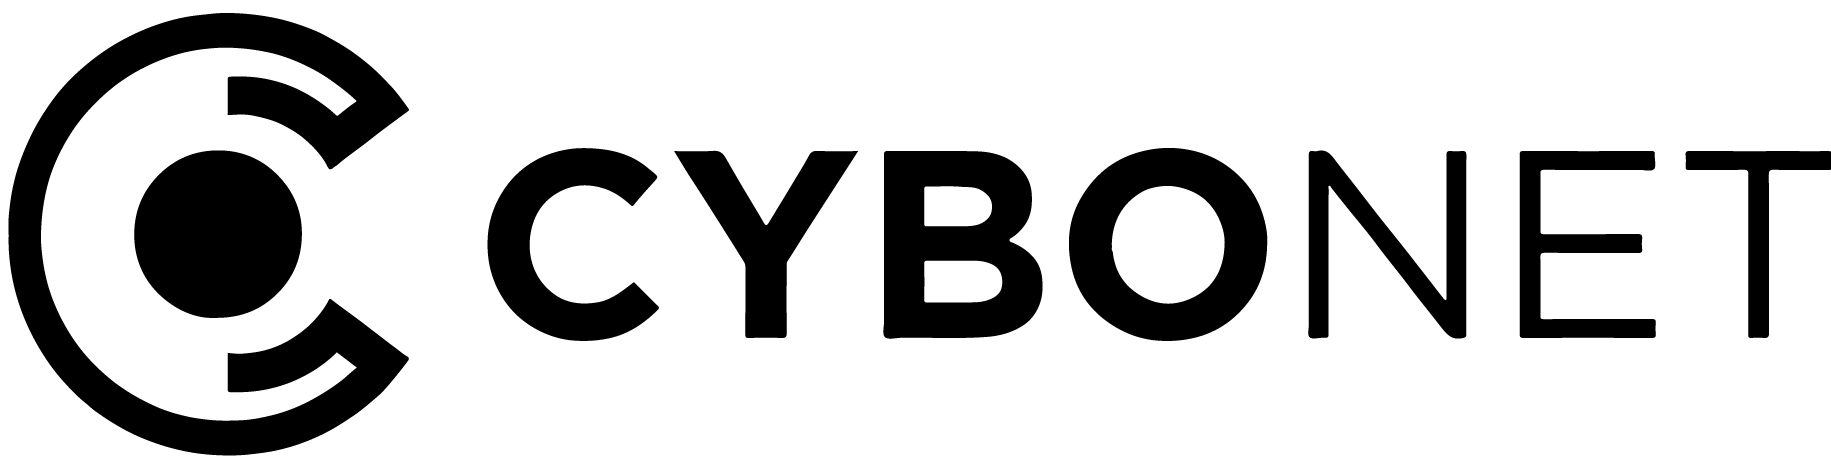 Cybonet logo